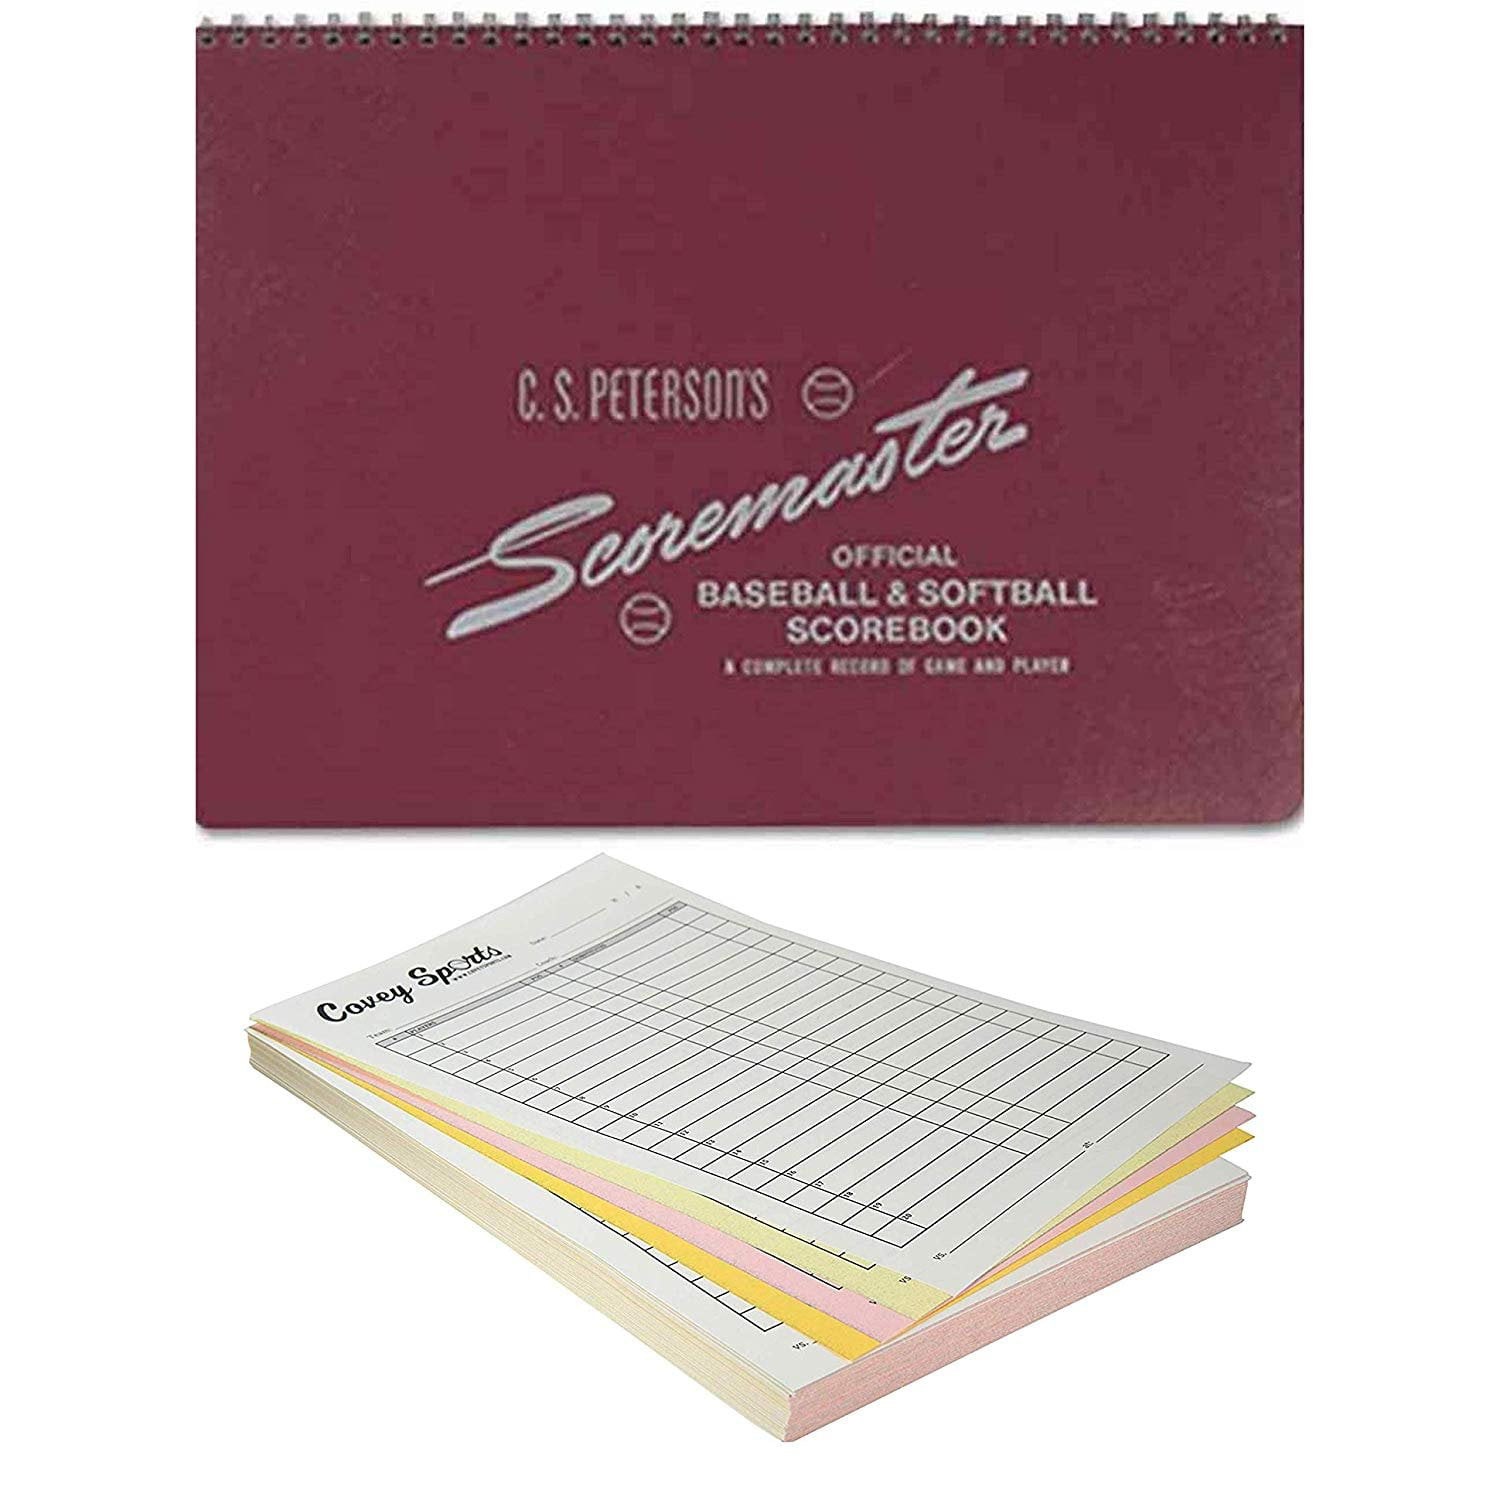 Covey Sports Baseball Softball Scorebook and Lineup Card Bundle Rawlings Score Master Scorekeeper Book Bundled with 30 Covey Lineup Cards